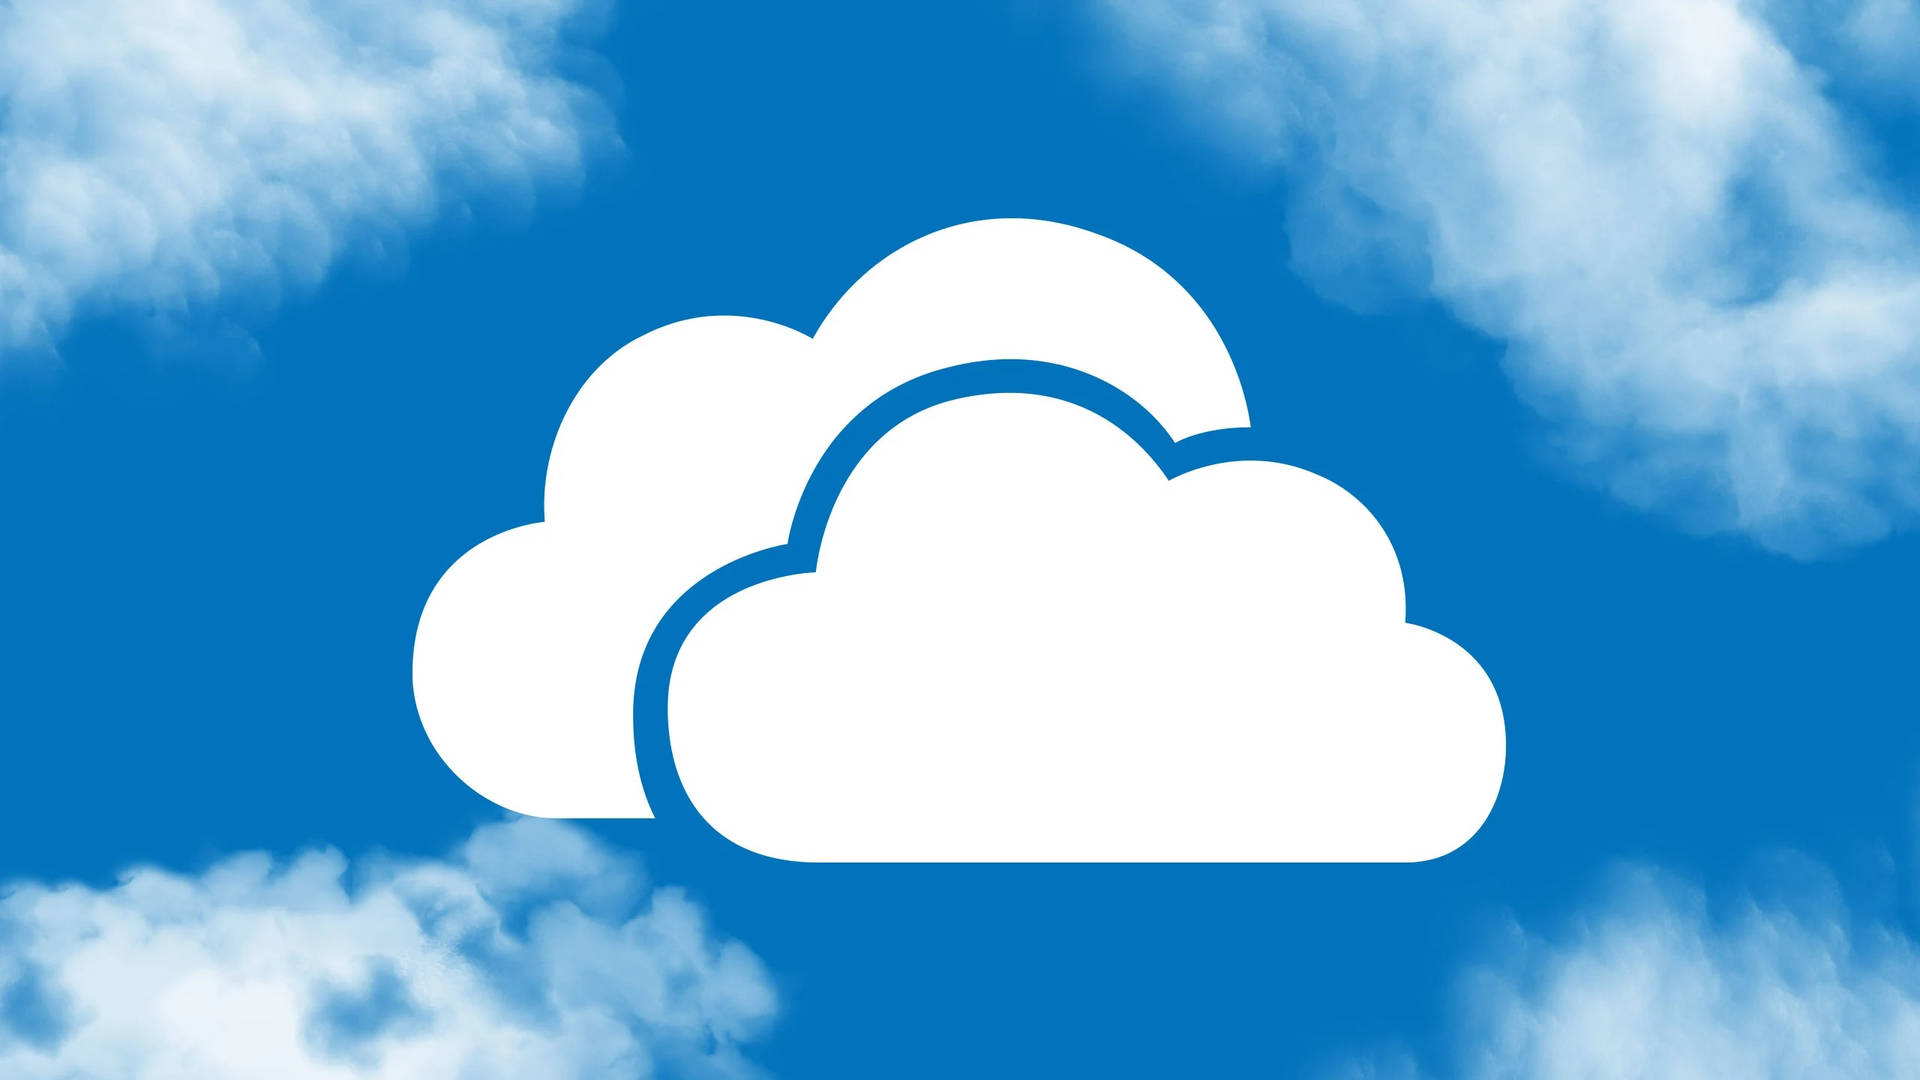 Light Blue Aesthetic Cloud Storage Symbol Picture